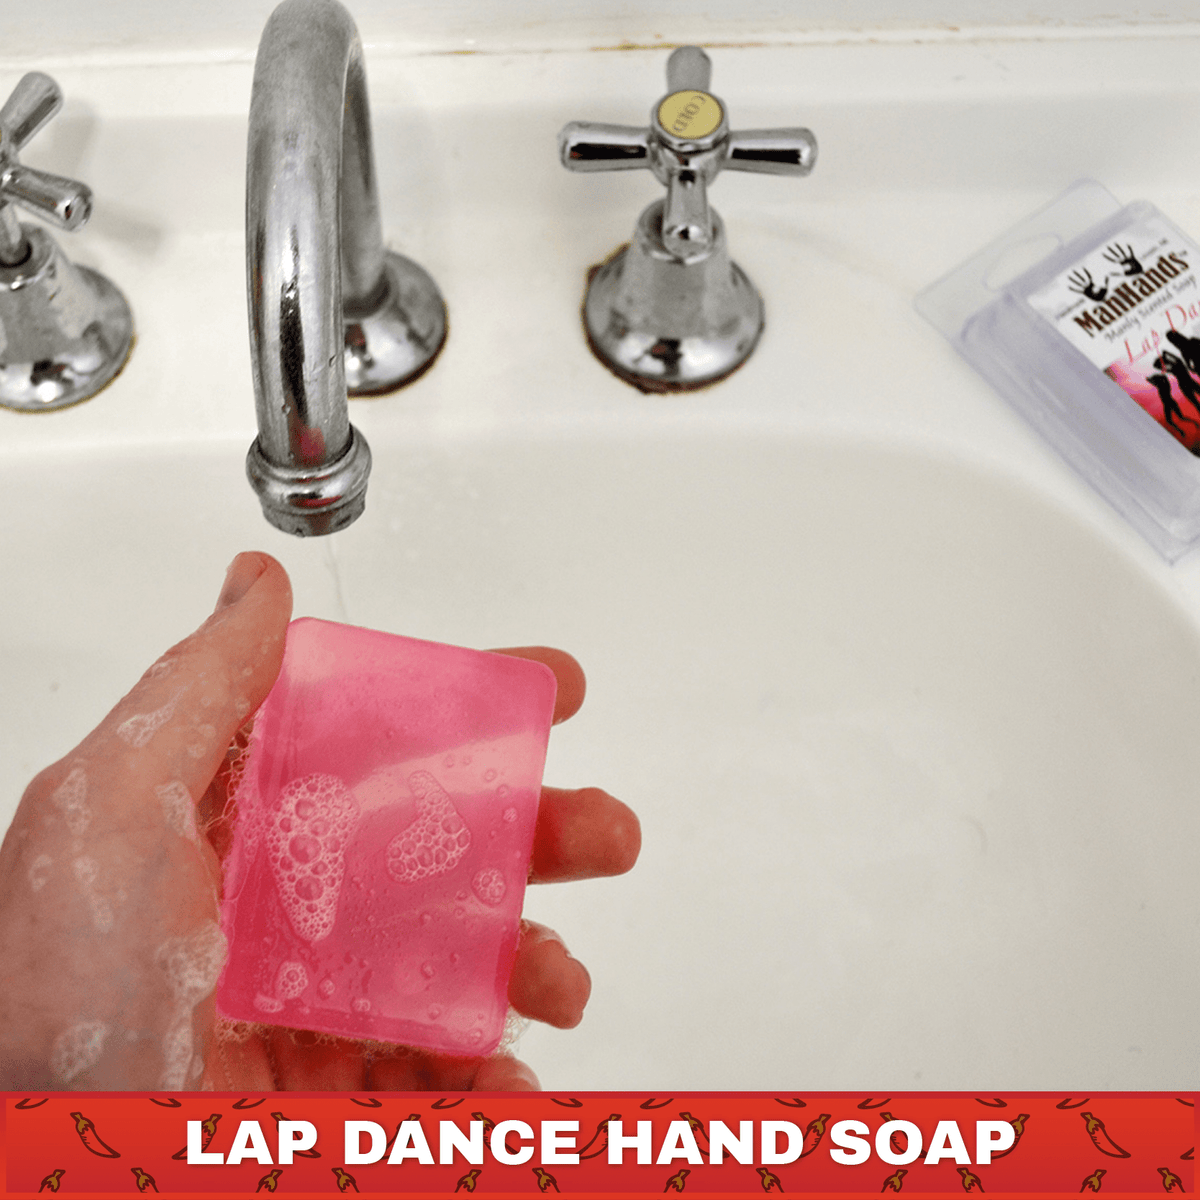 Lap Dance Scented Soap 🧼💃 - Hand Soap